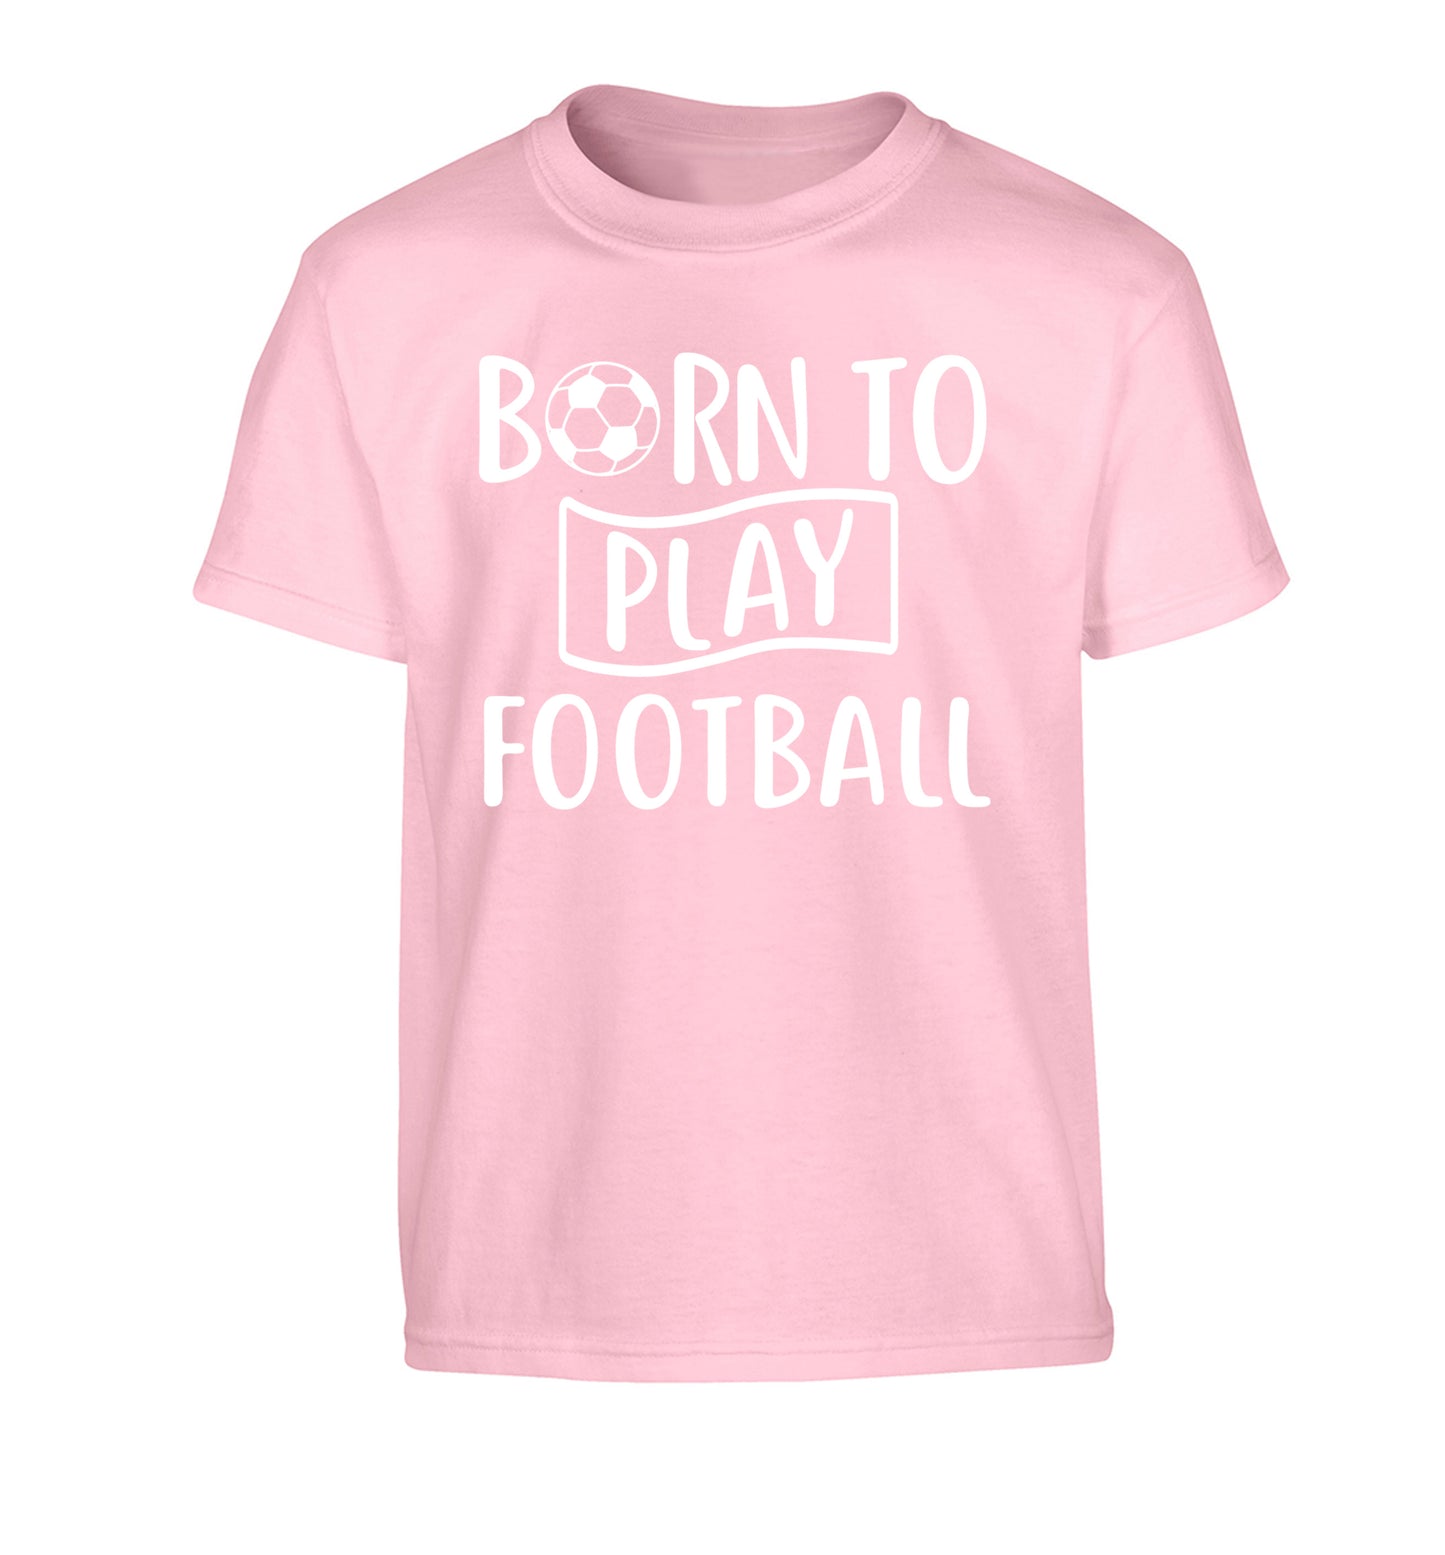 Born to play football Children's light pink Tshirt 12-14 Years